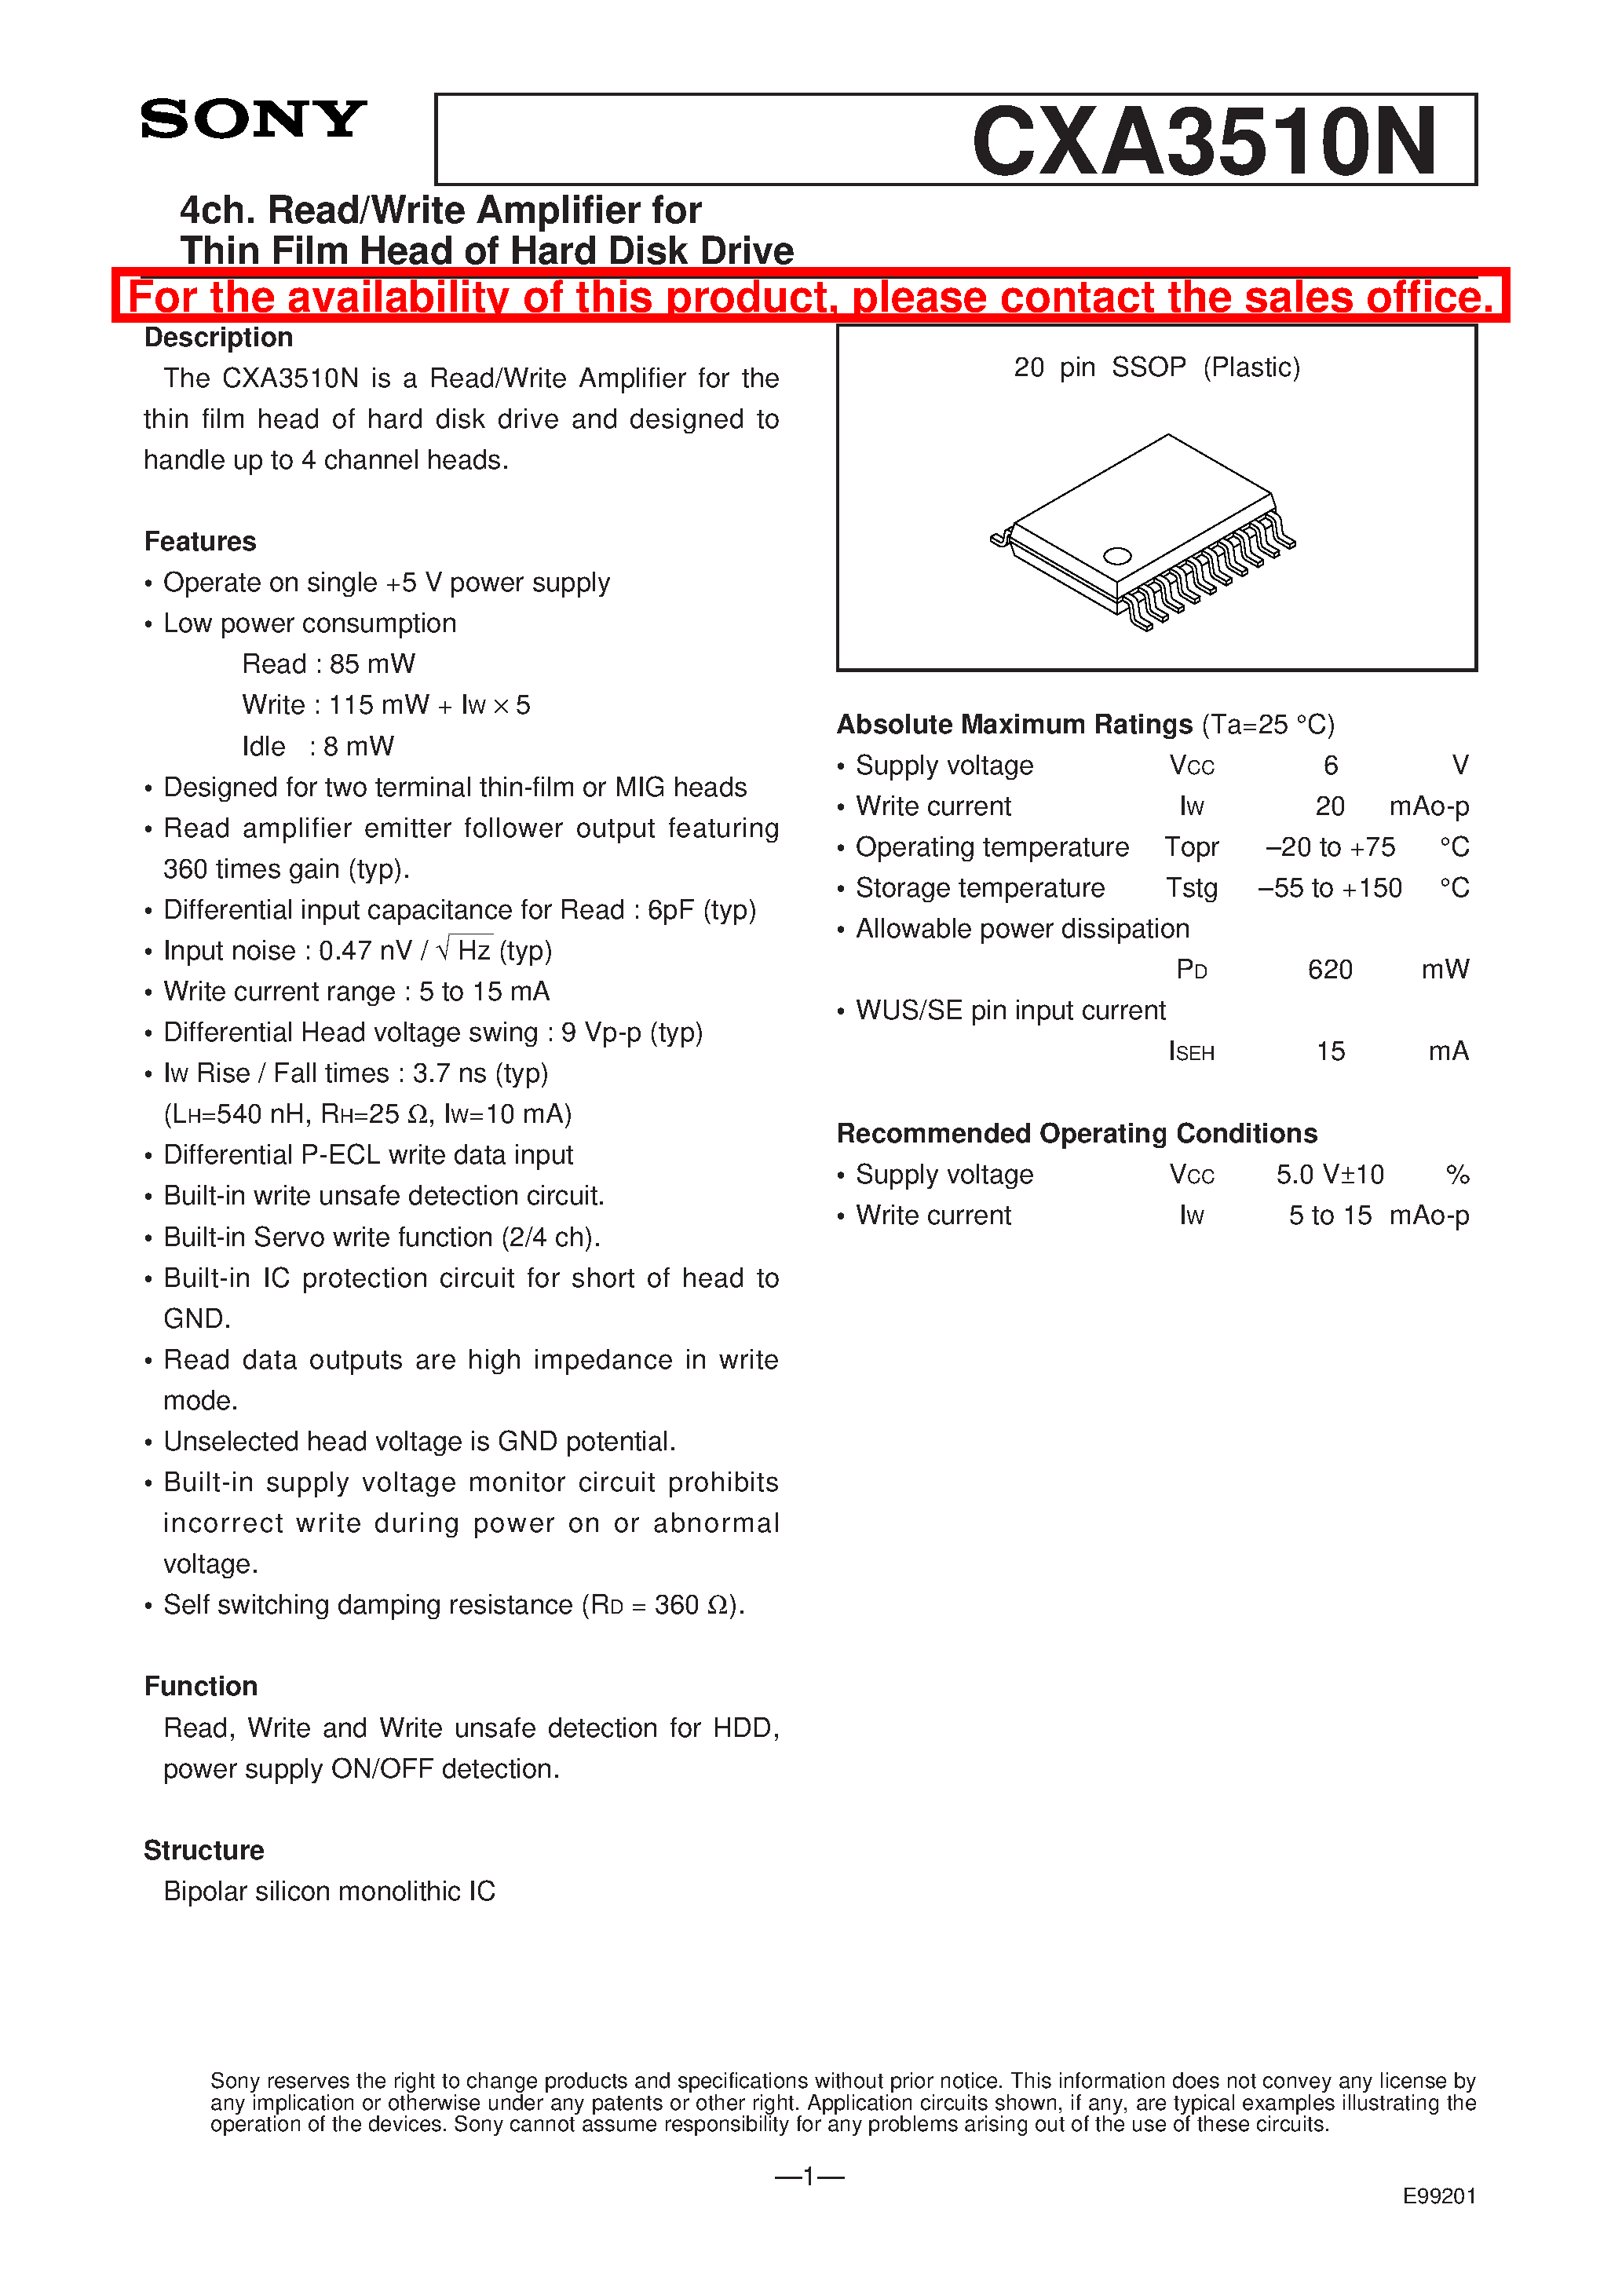 Datasheet CXA3510N - 4ch. Read/Write Amplifier for Thin Film Head of Hard Disk Drive page 1